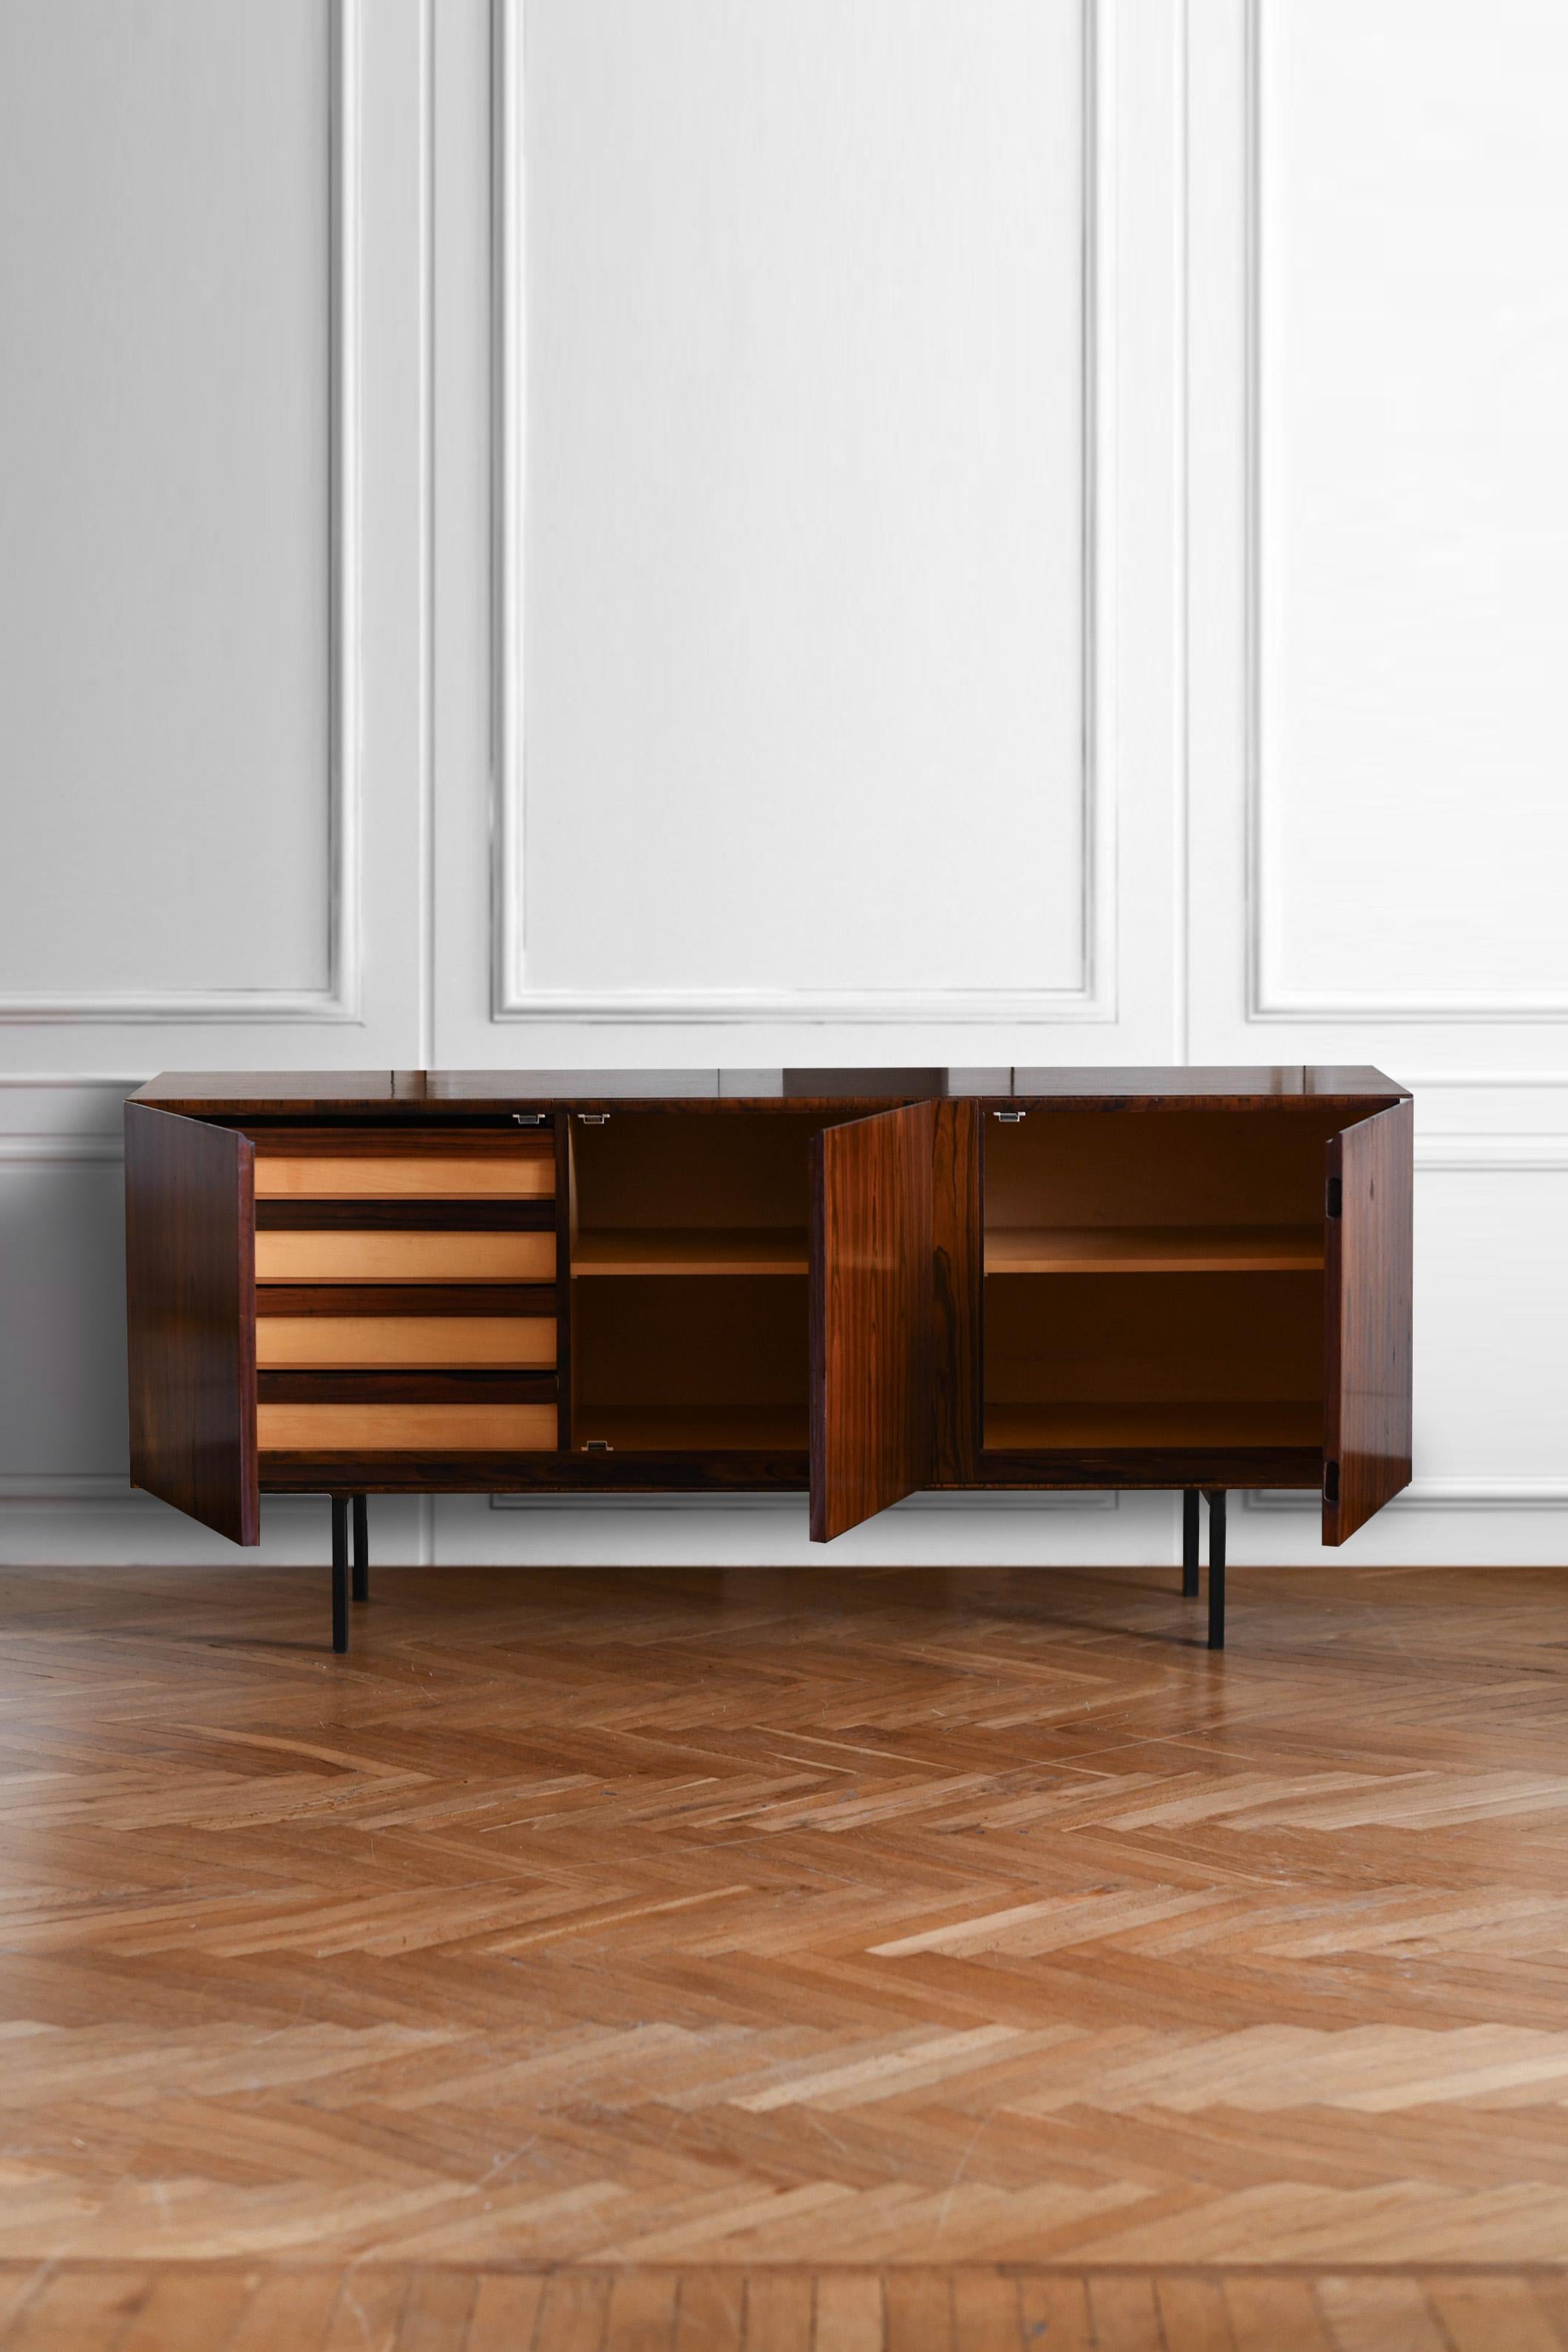 European Wooden Sideboard ME-WA Qualitats Mobel – Konstanz model, 1960s